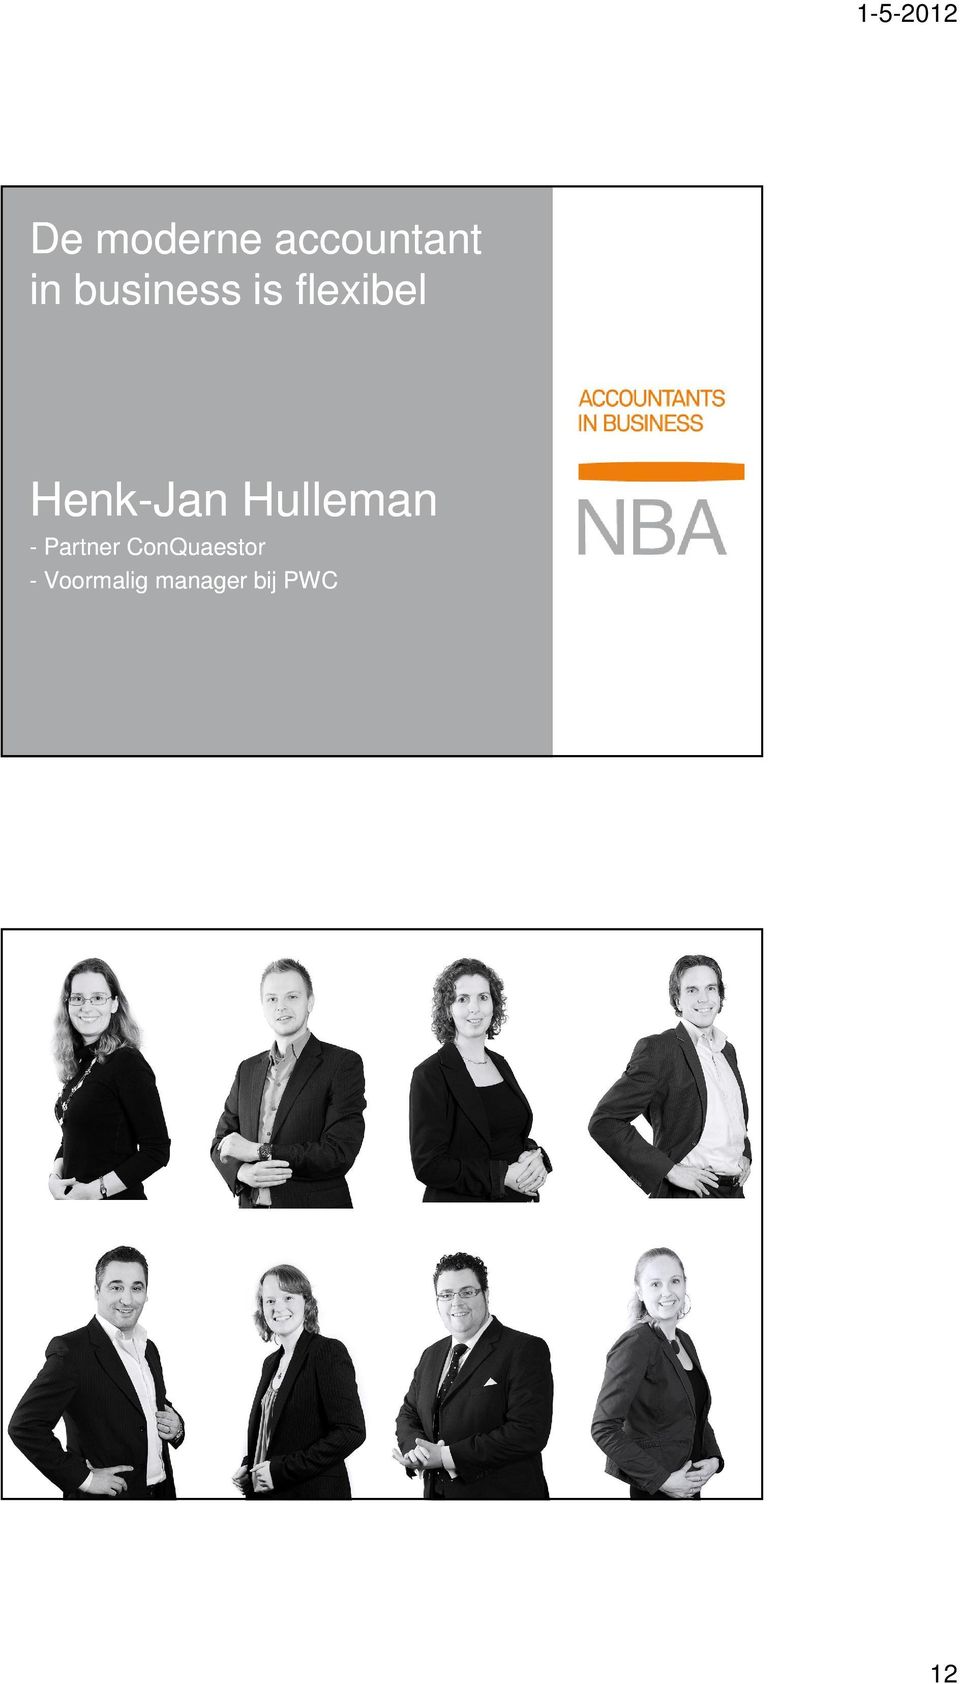 Henk-Jan Hulleman - Partner